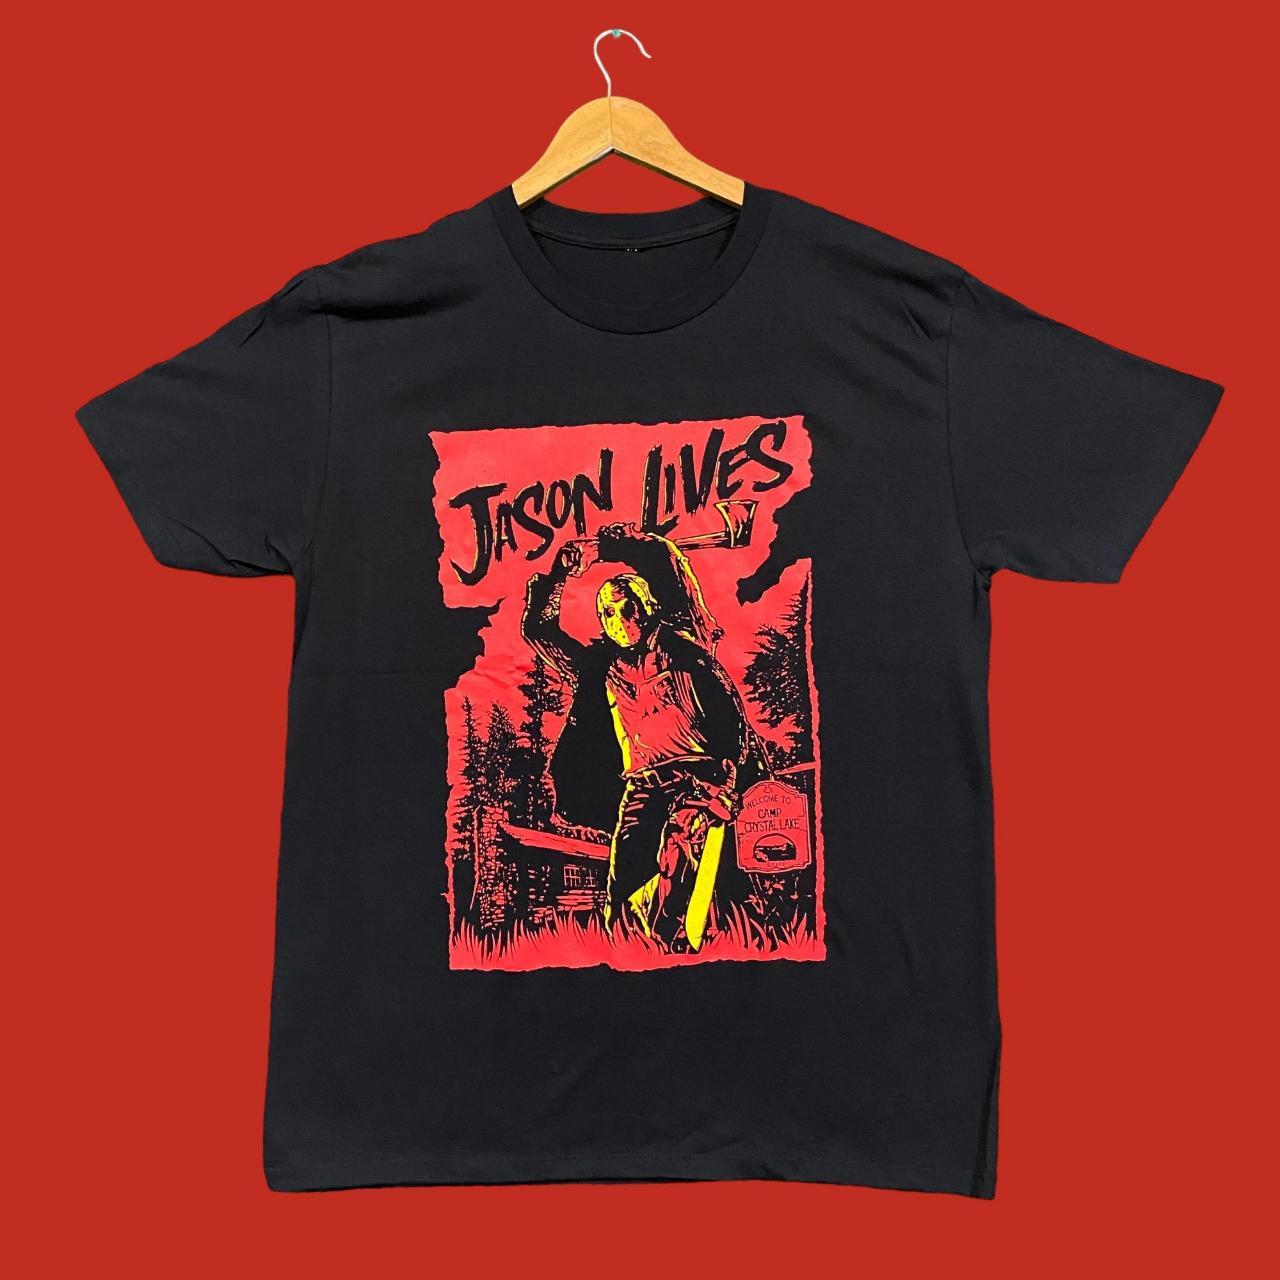 Jason Voorhees Supreme Premium Men's T-Shirt 